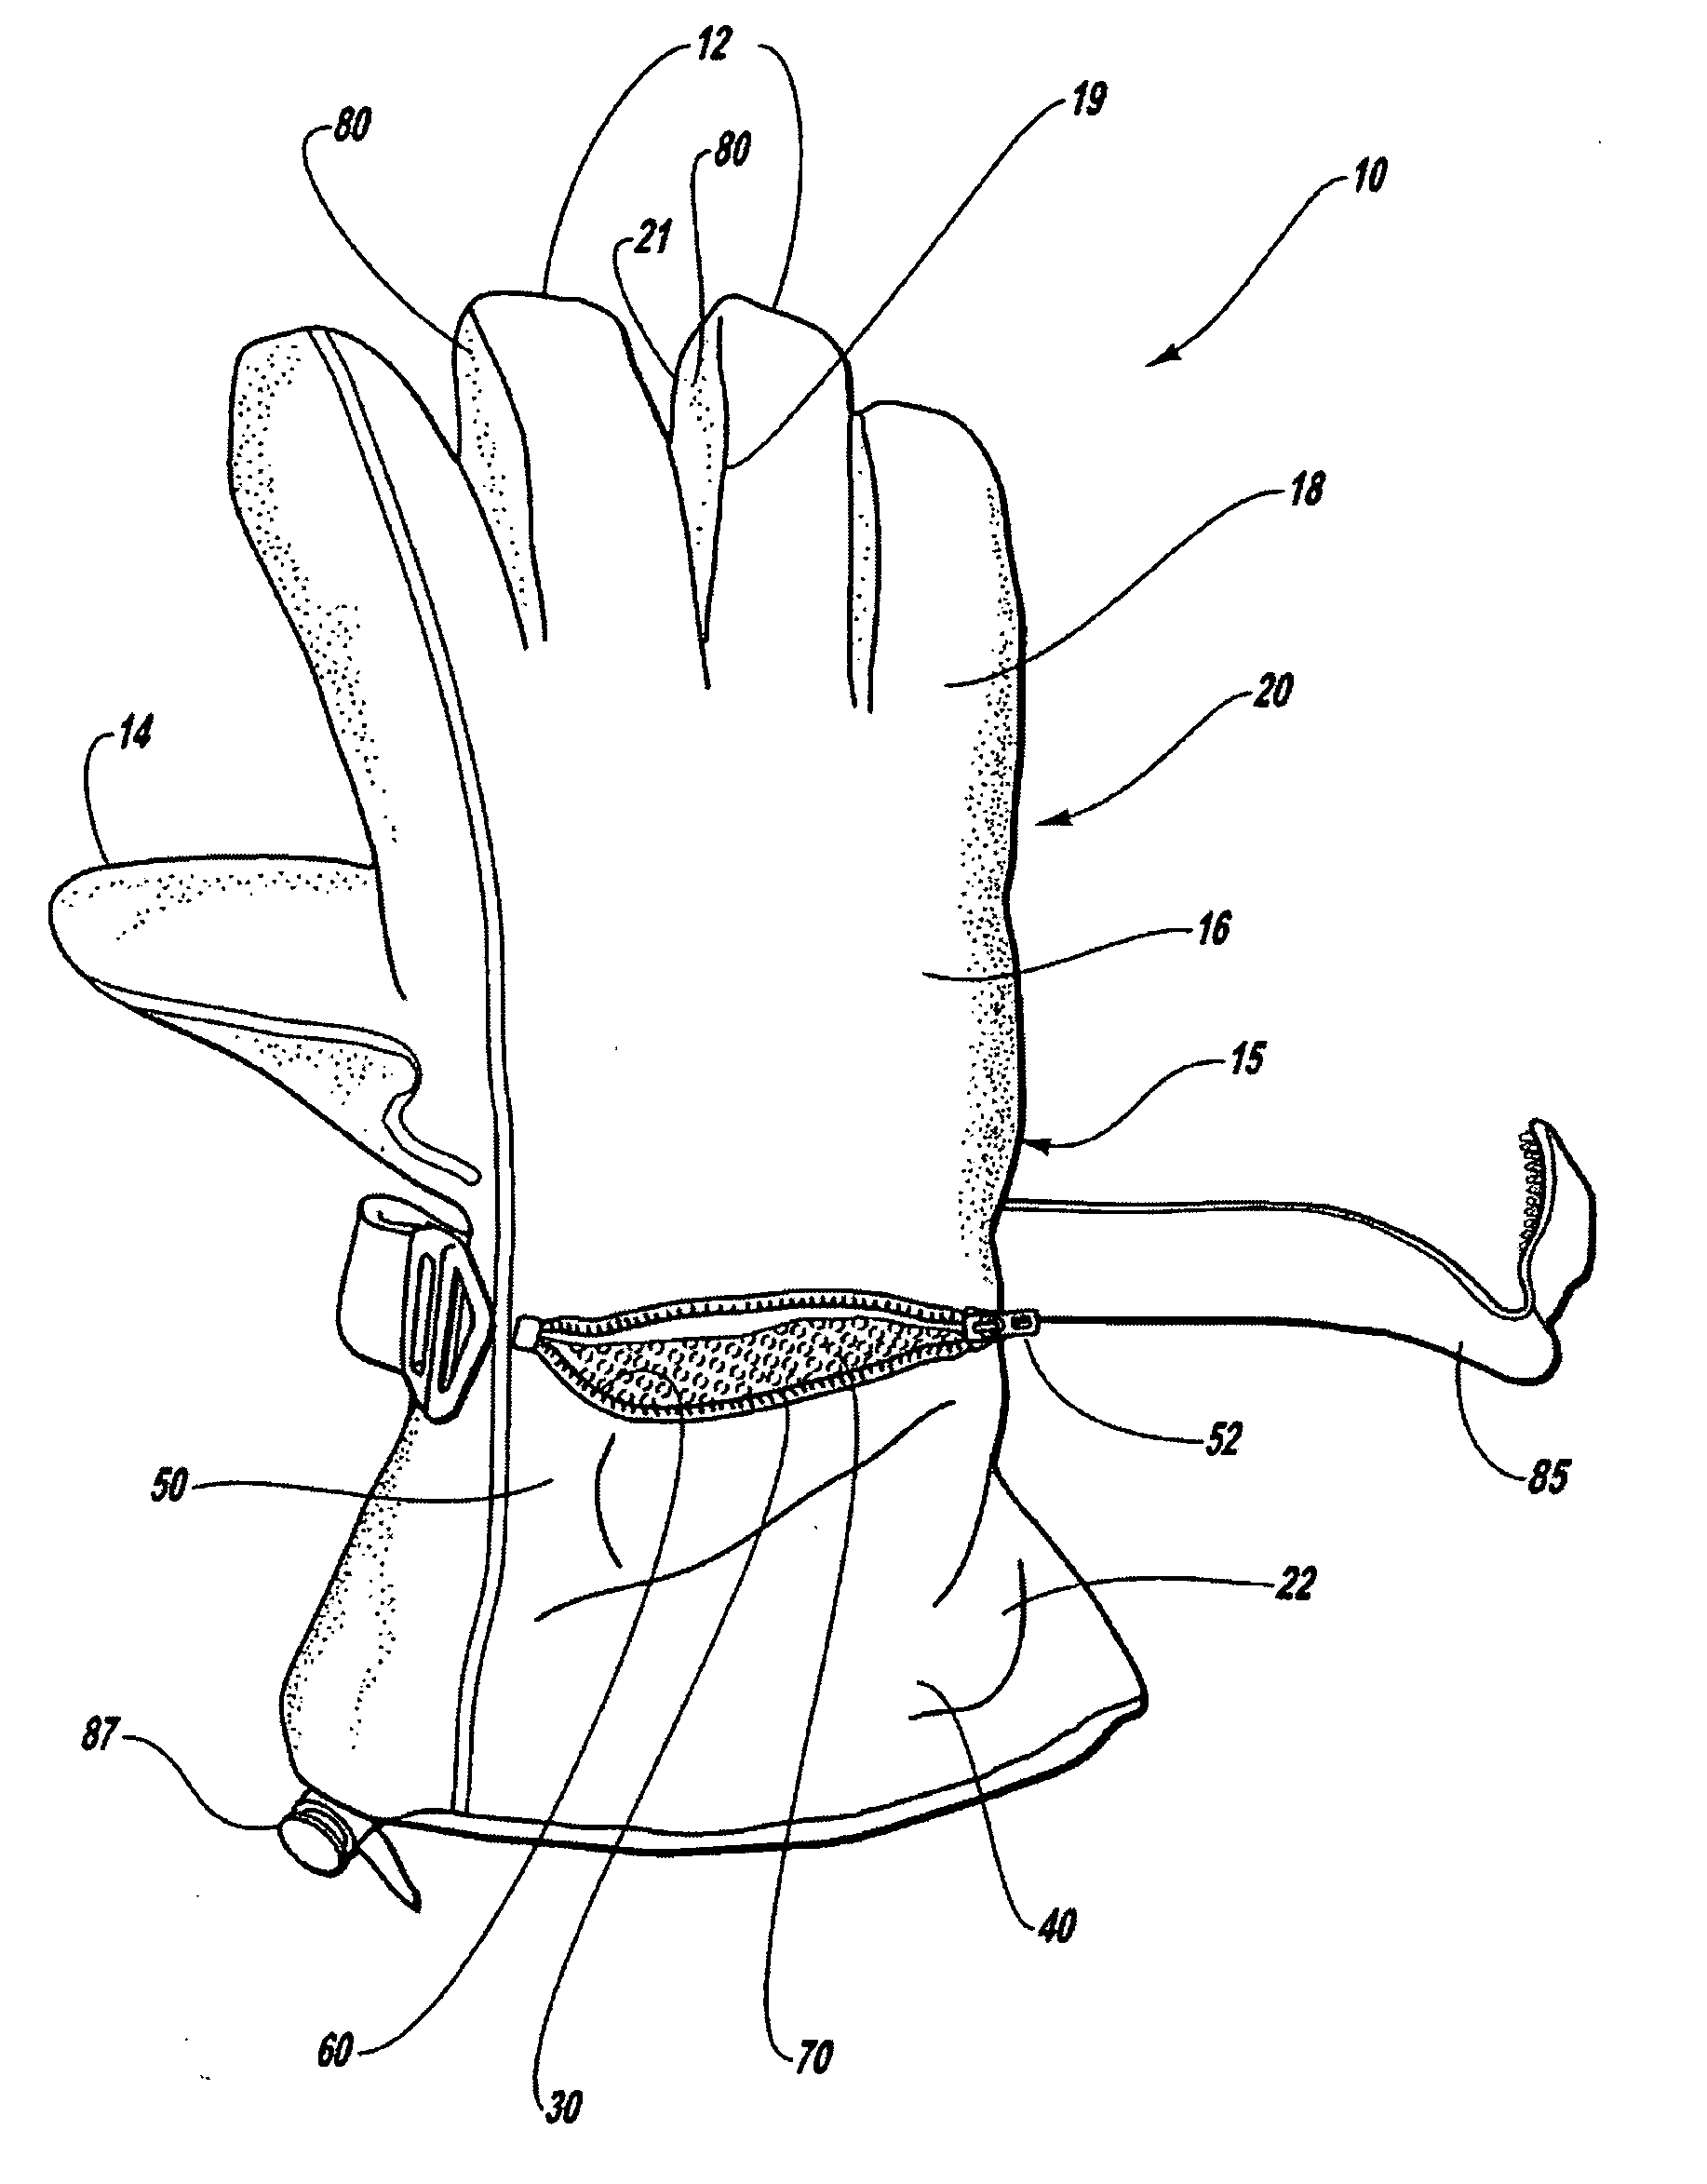 Glove with flow-through pocket